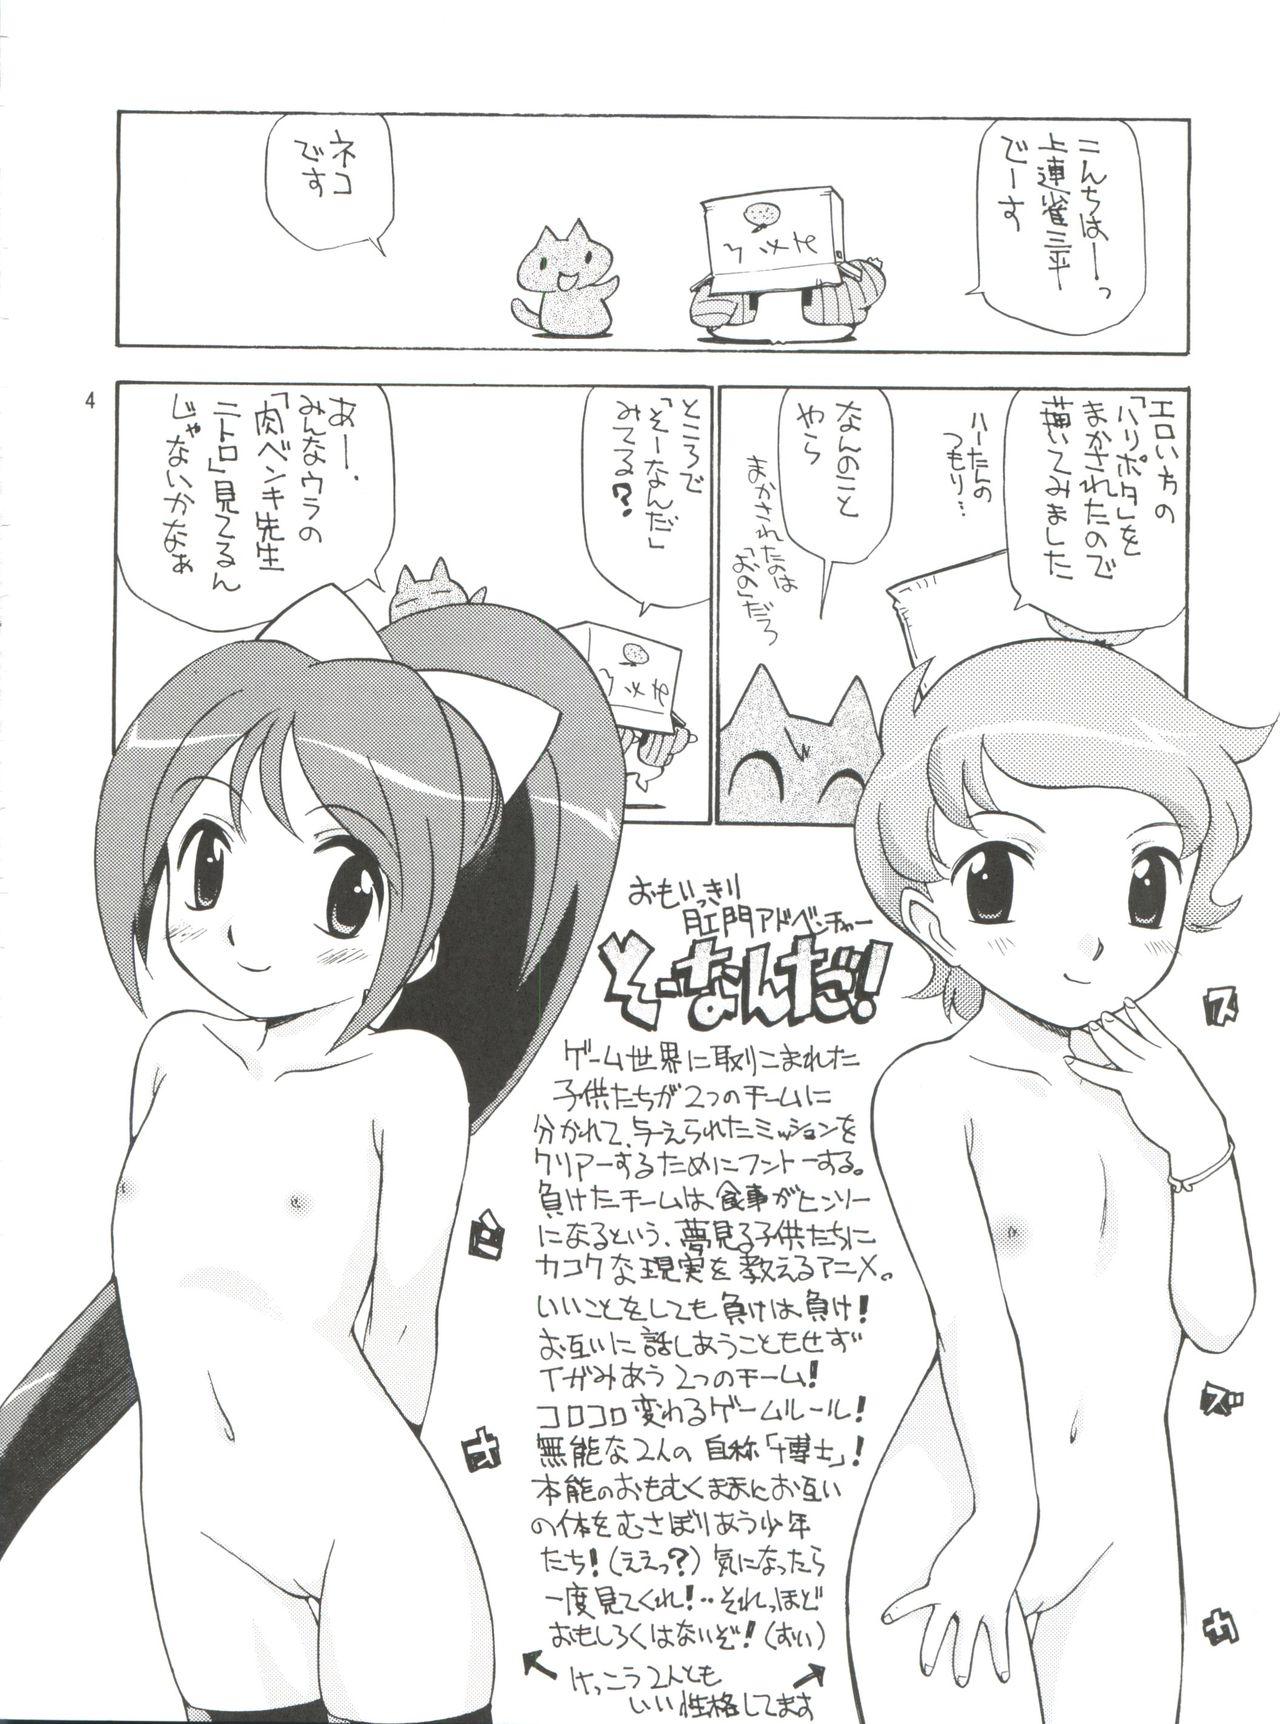 Curious Omoikikiri Chijo Adventure - Tokyo mew mew Omoikkiri kagaku adventure sou nanda Bomberman jetters Latex - Page 4